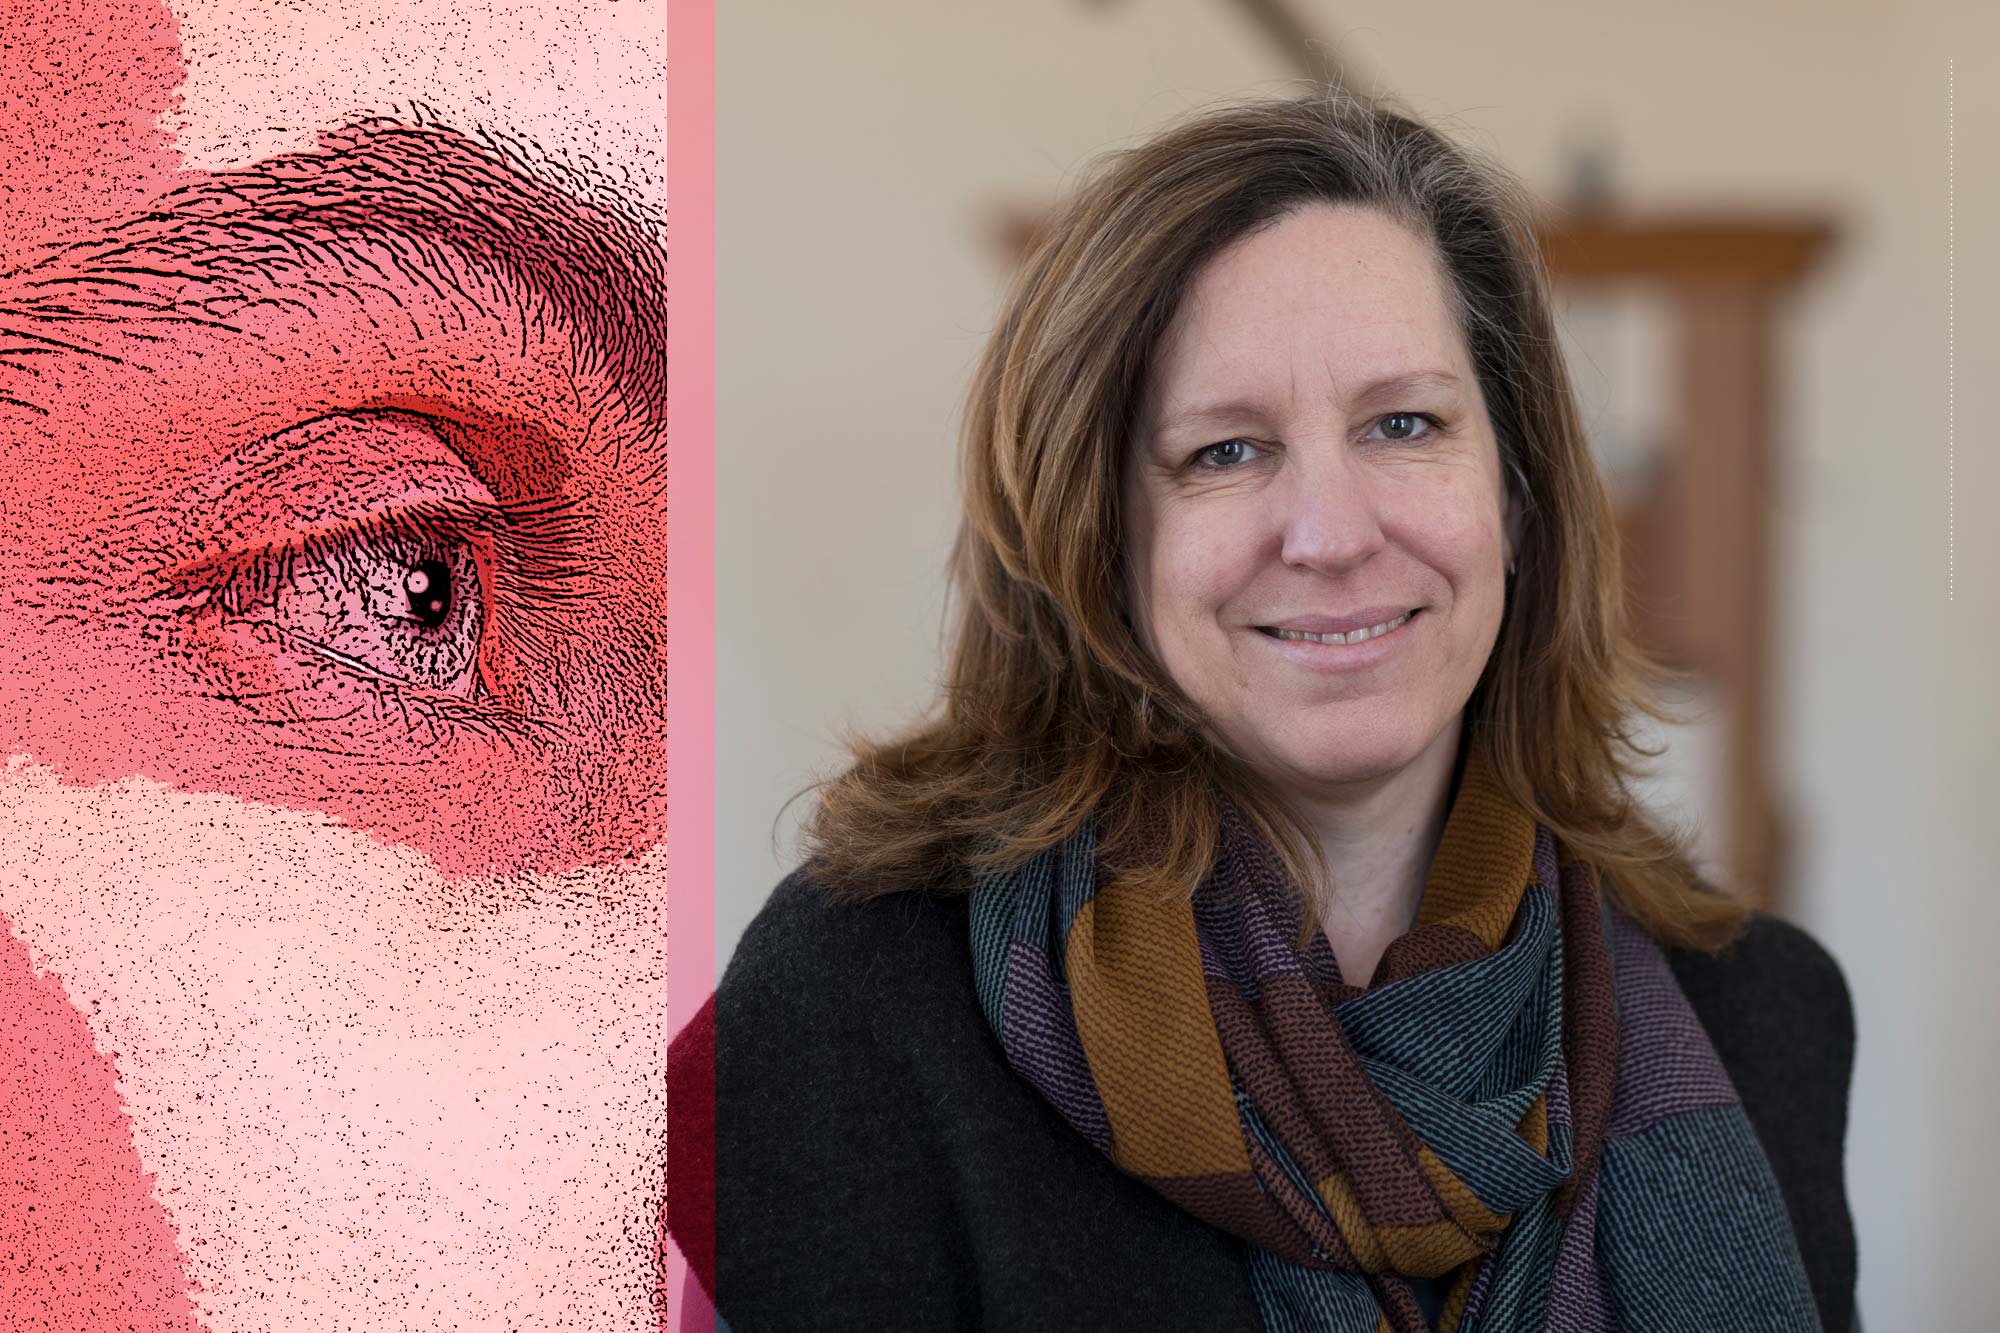 Left: upclose image of a eye on a face Right: Molly Schwartzburg headshot